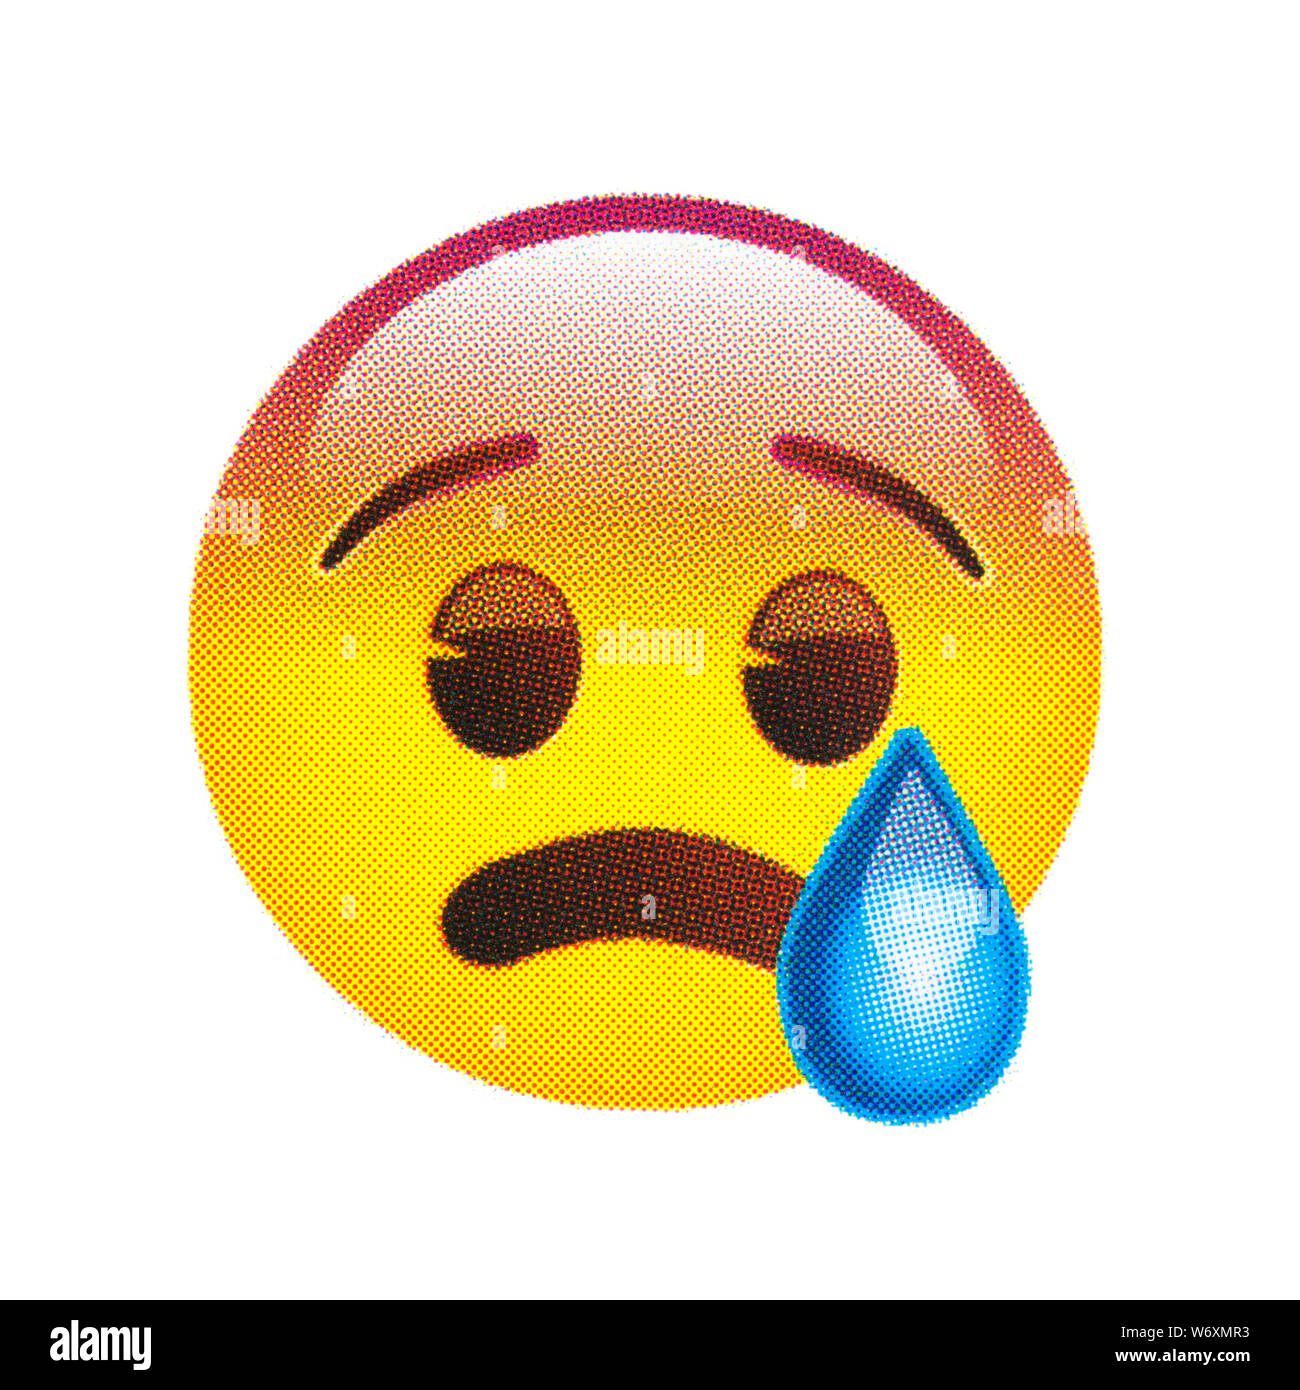 Crying face emoticon Stock Photo